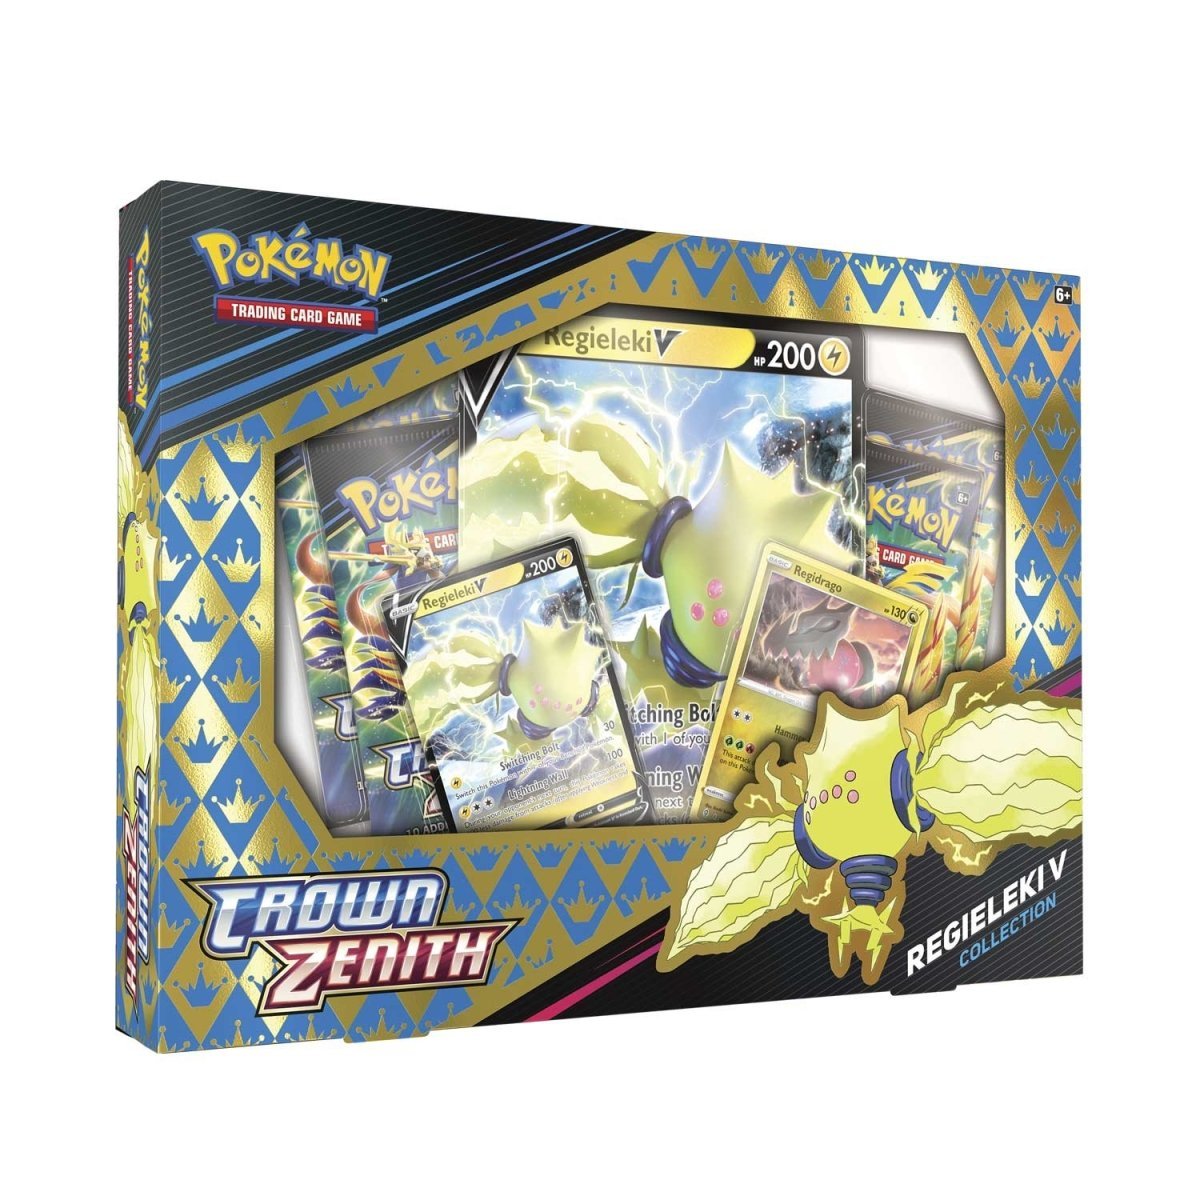 Pokémon TCG: Crown Zenith Regieleki V Collection Box - PokeRvmCollection Box